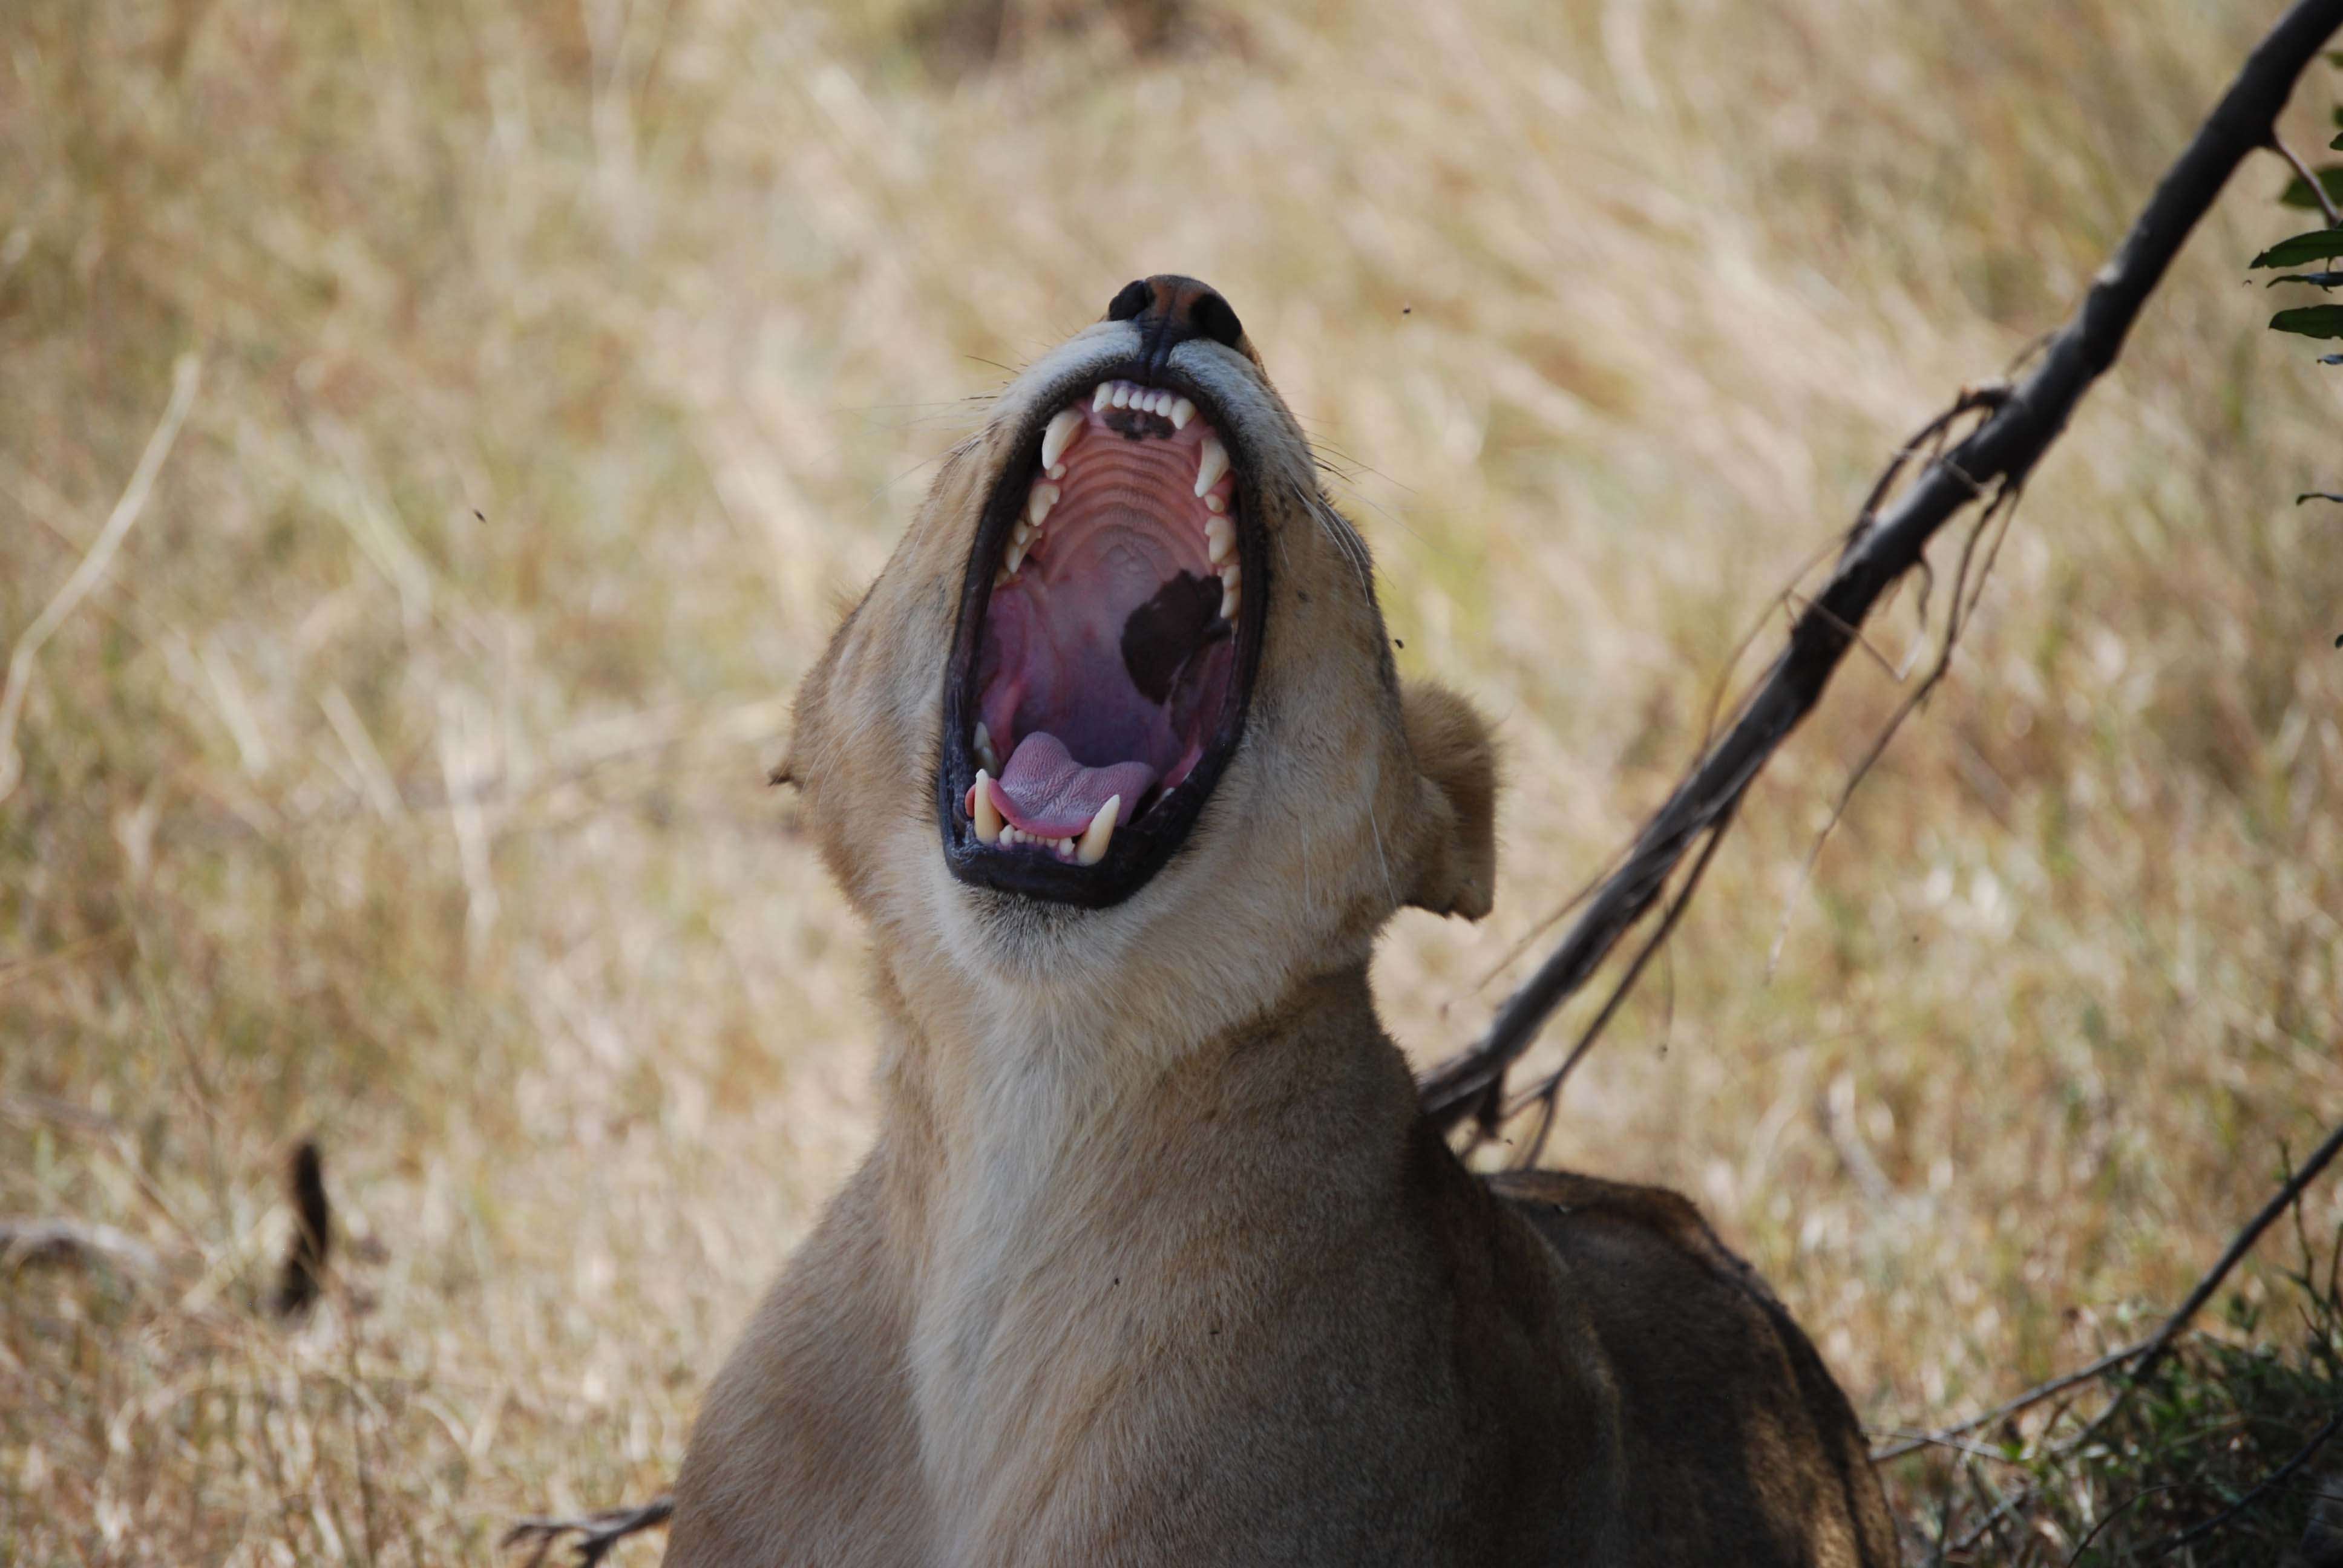 Nuestro primer safari - Regreso al Mara - Kenia (5)